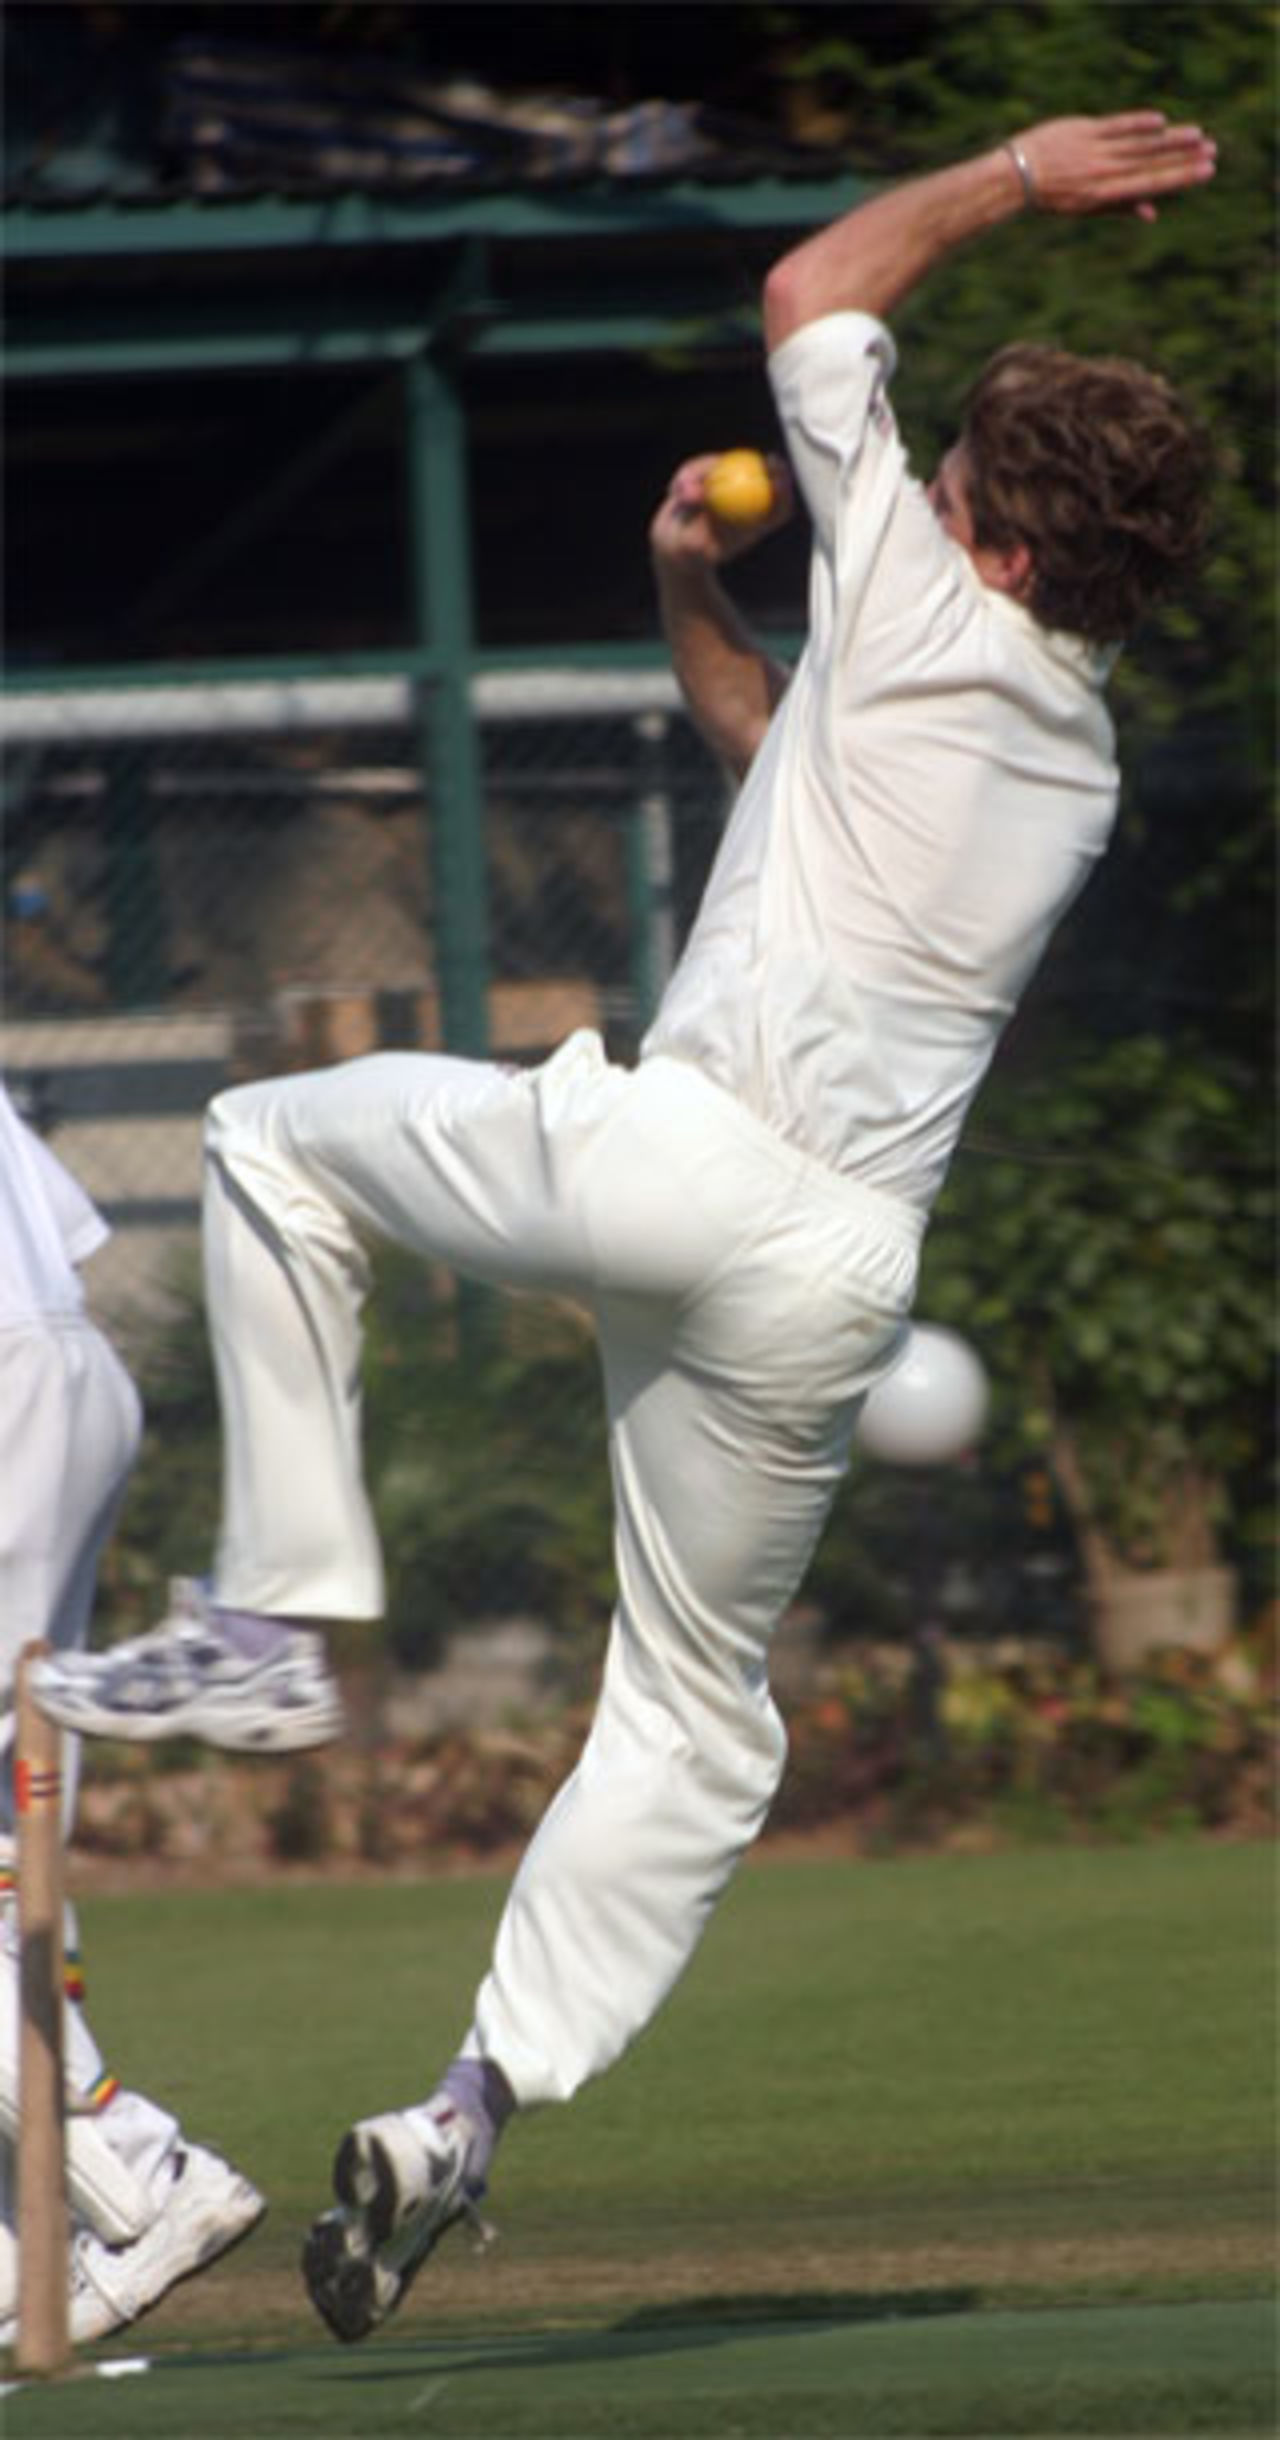 Ryan Eagleson bowling for Gap Ramblers at Kowloon Cricket Club during the 2003-04 season